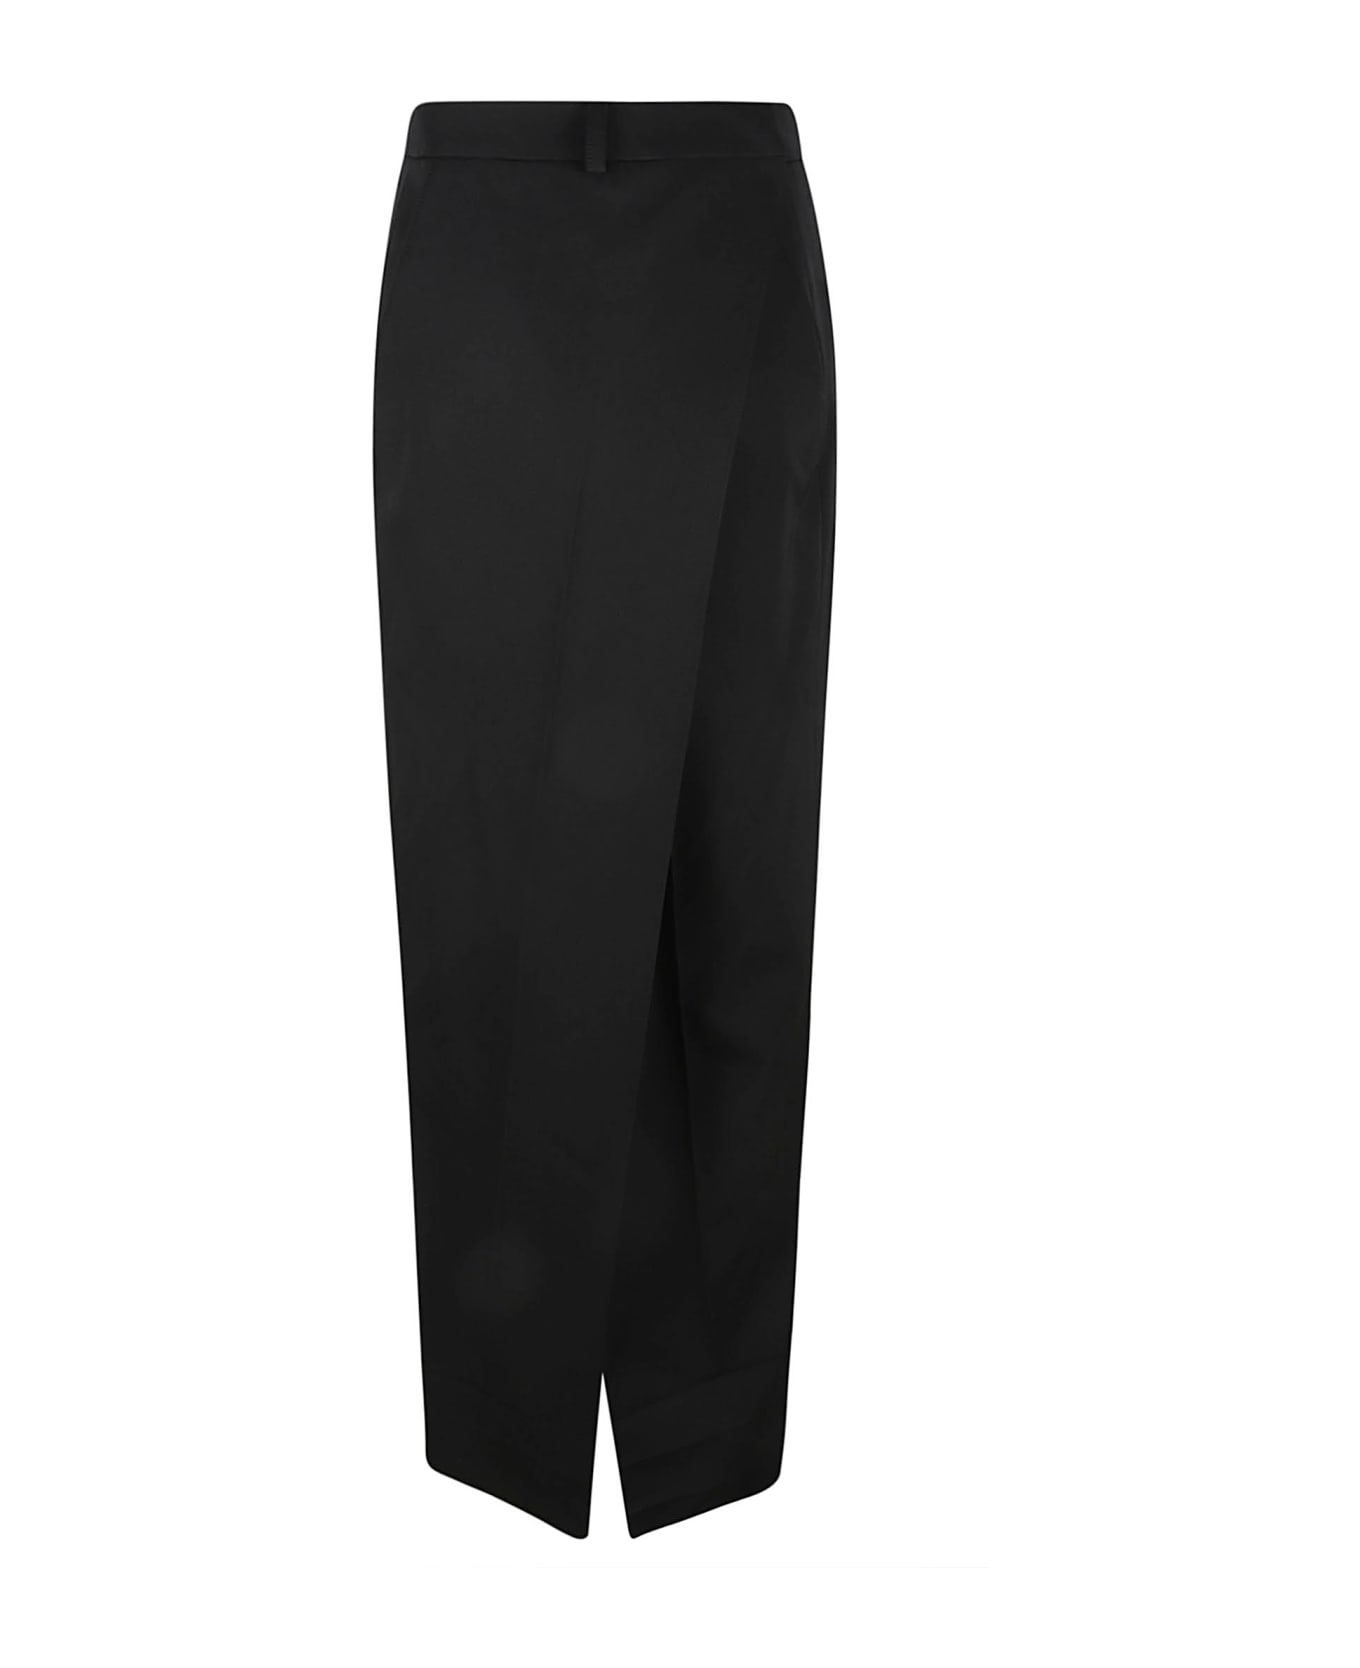 Balenciaga Diy Skirt - Black スカート